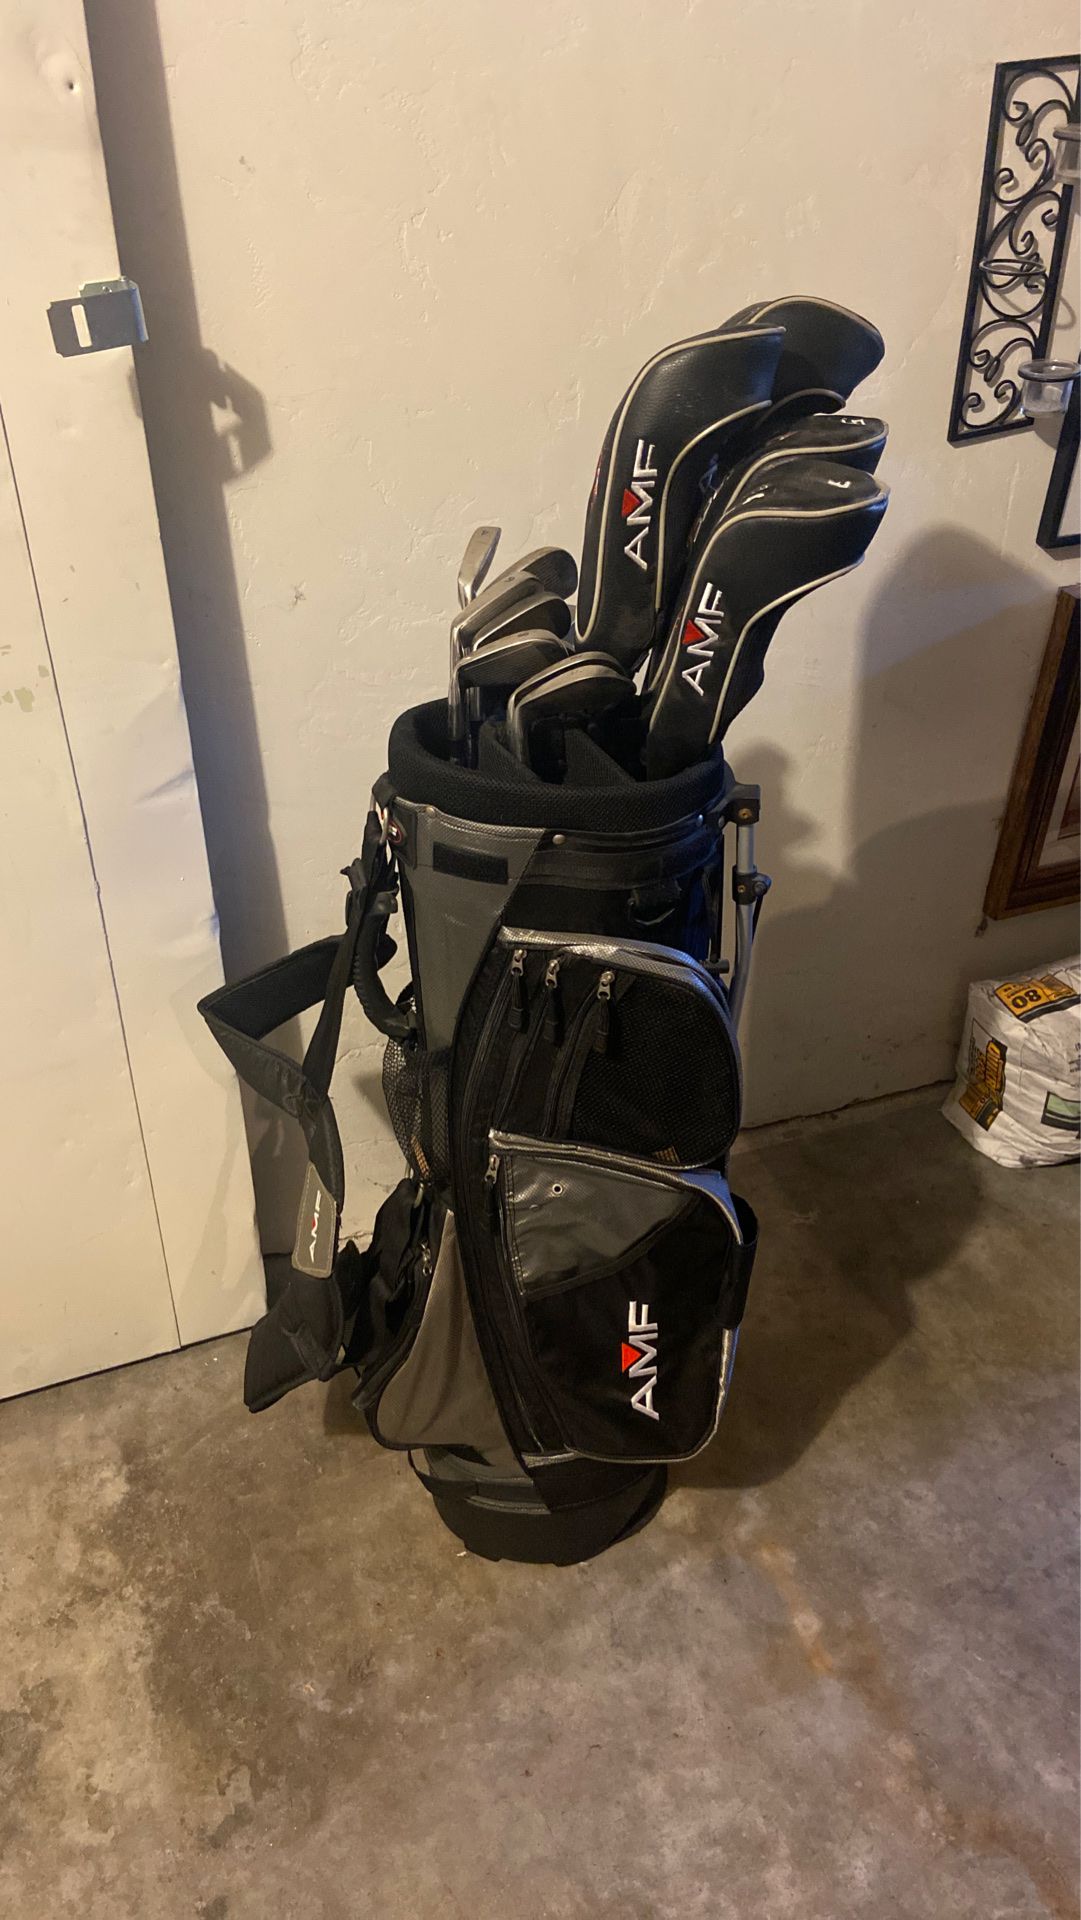 AMF G-Speed Plus golf club set with bag.